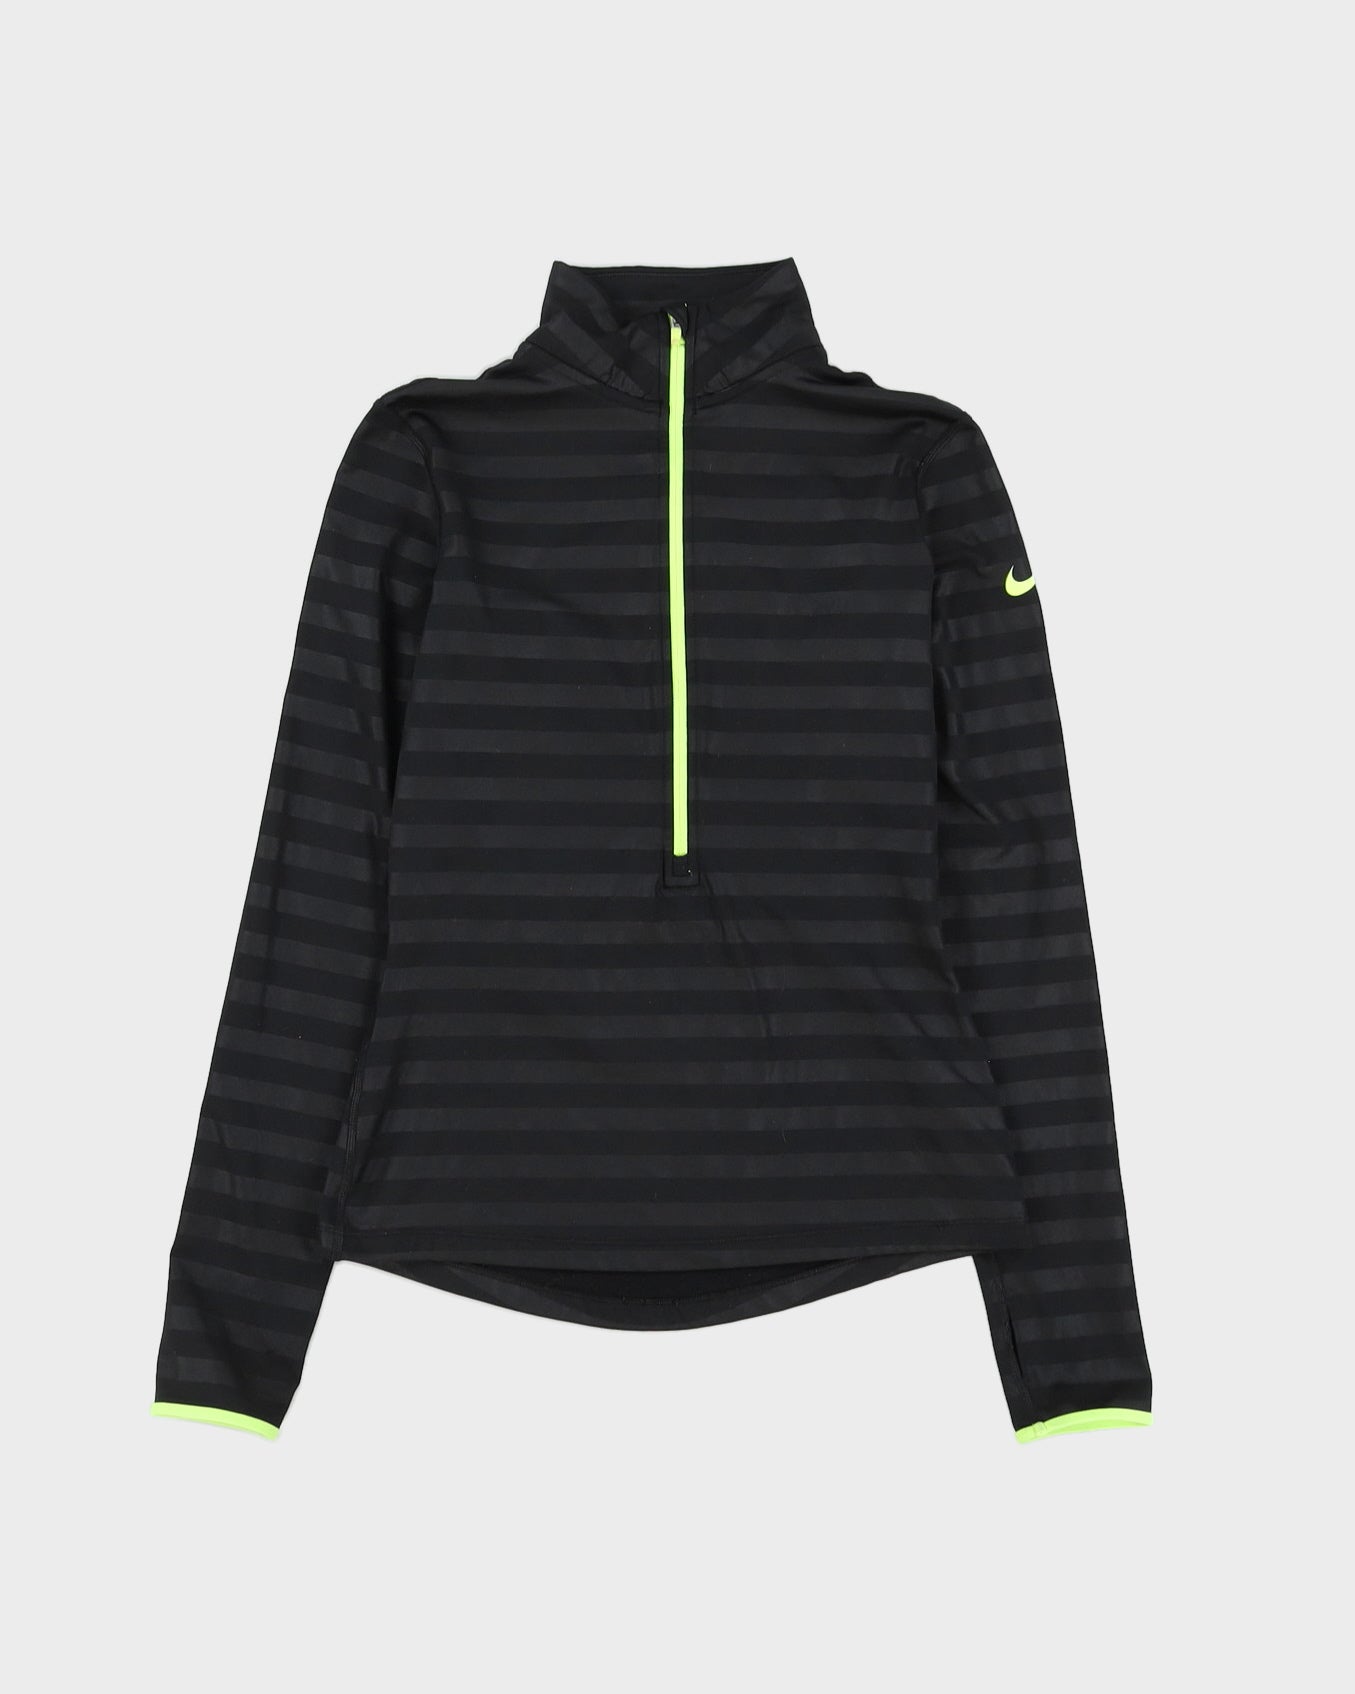 Nike Pro Black Striped Sports Jacket - S